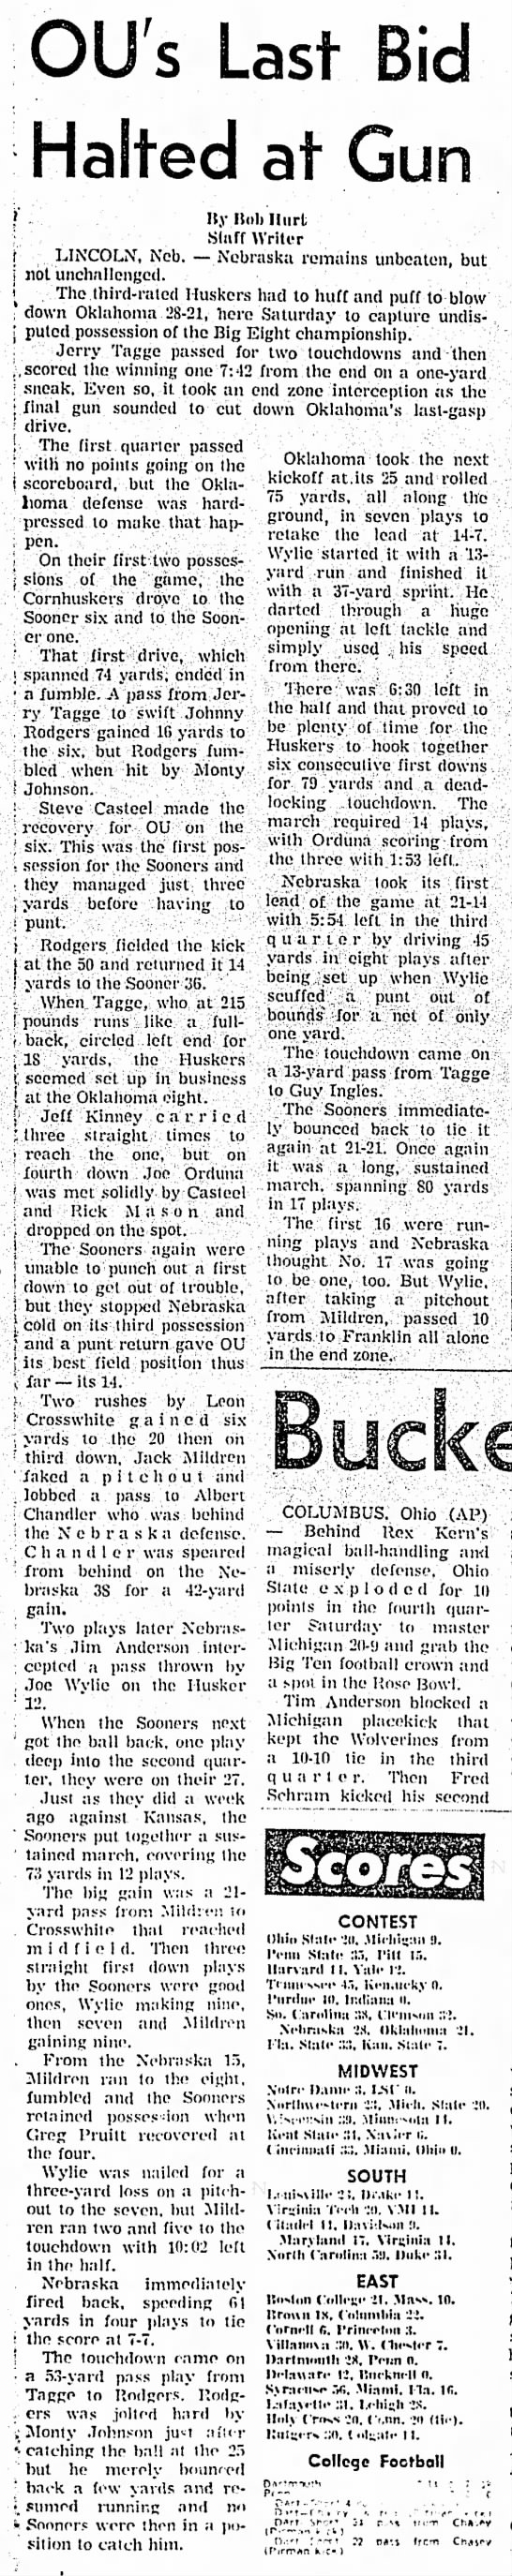 1970 Oklahoma-Nebraska football, OKC - 